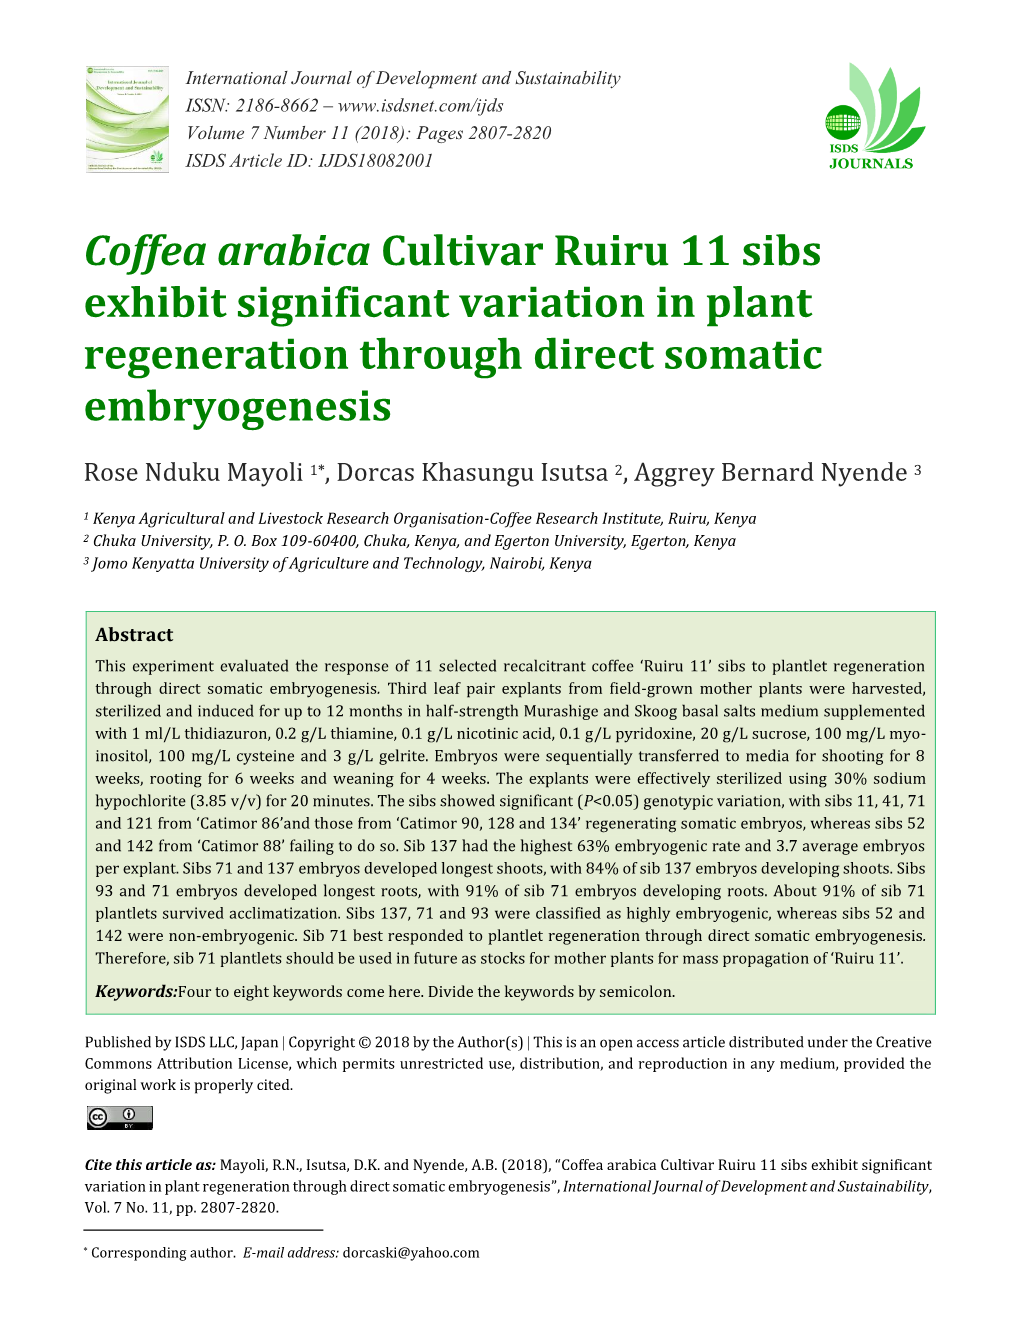 Coffea Arabica Cultivar Ruiru 11 Sibs Exhibit Significant Variation in Plant Regeneration Through Direct Somatic Embryogenesis